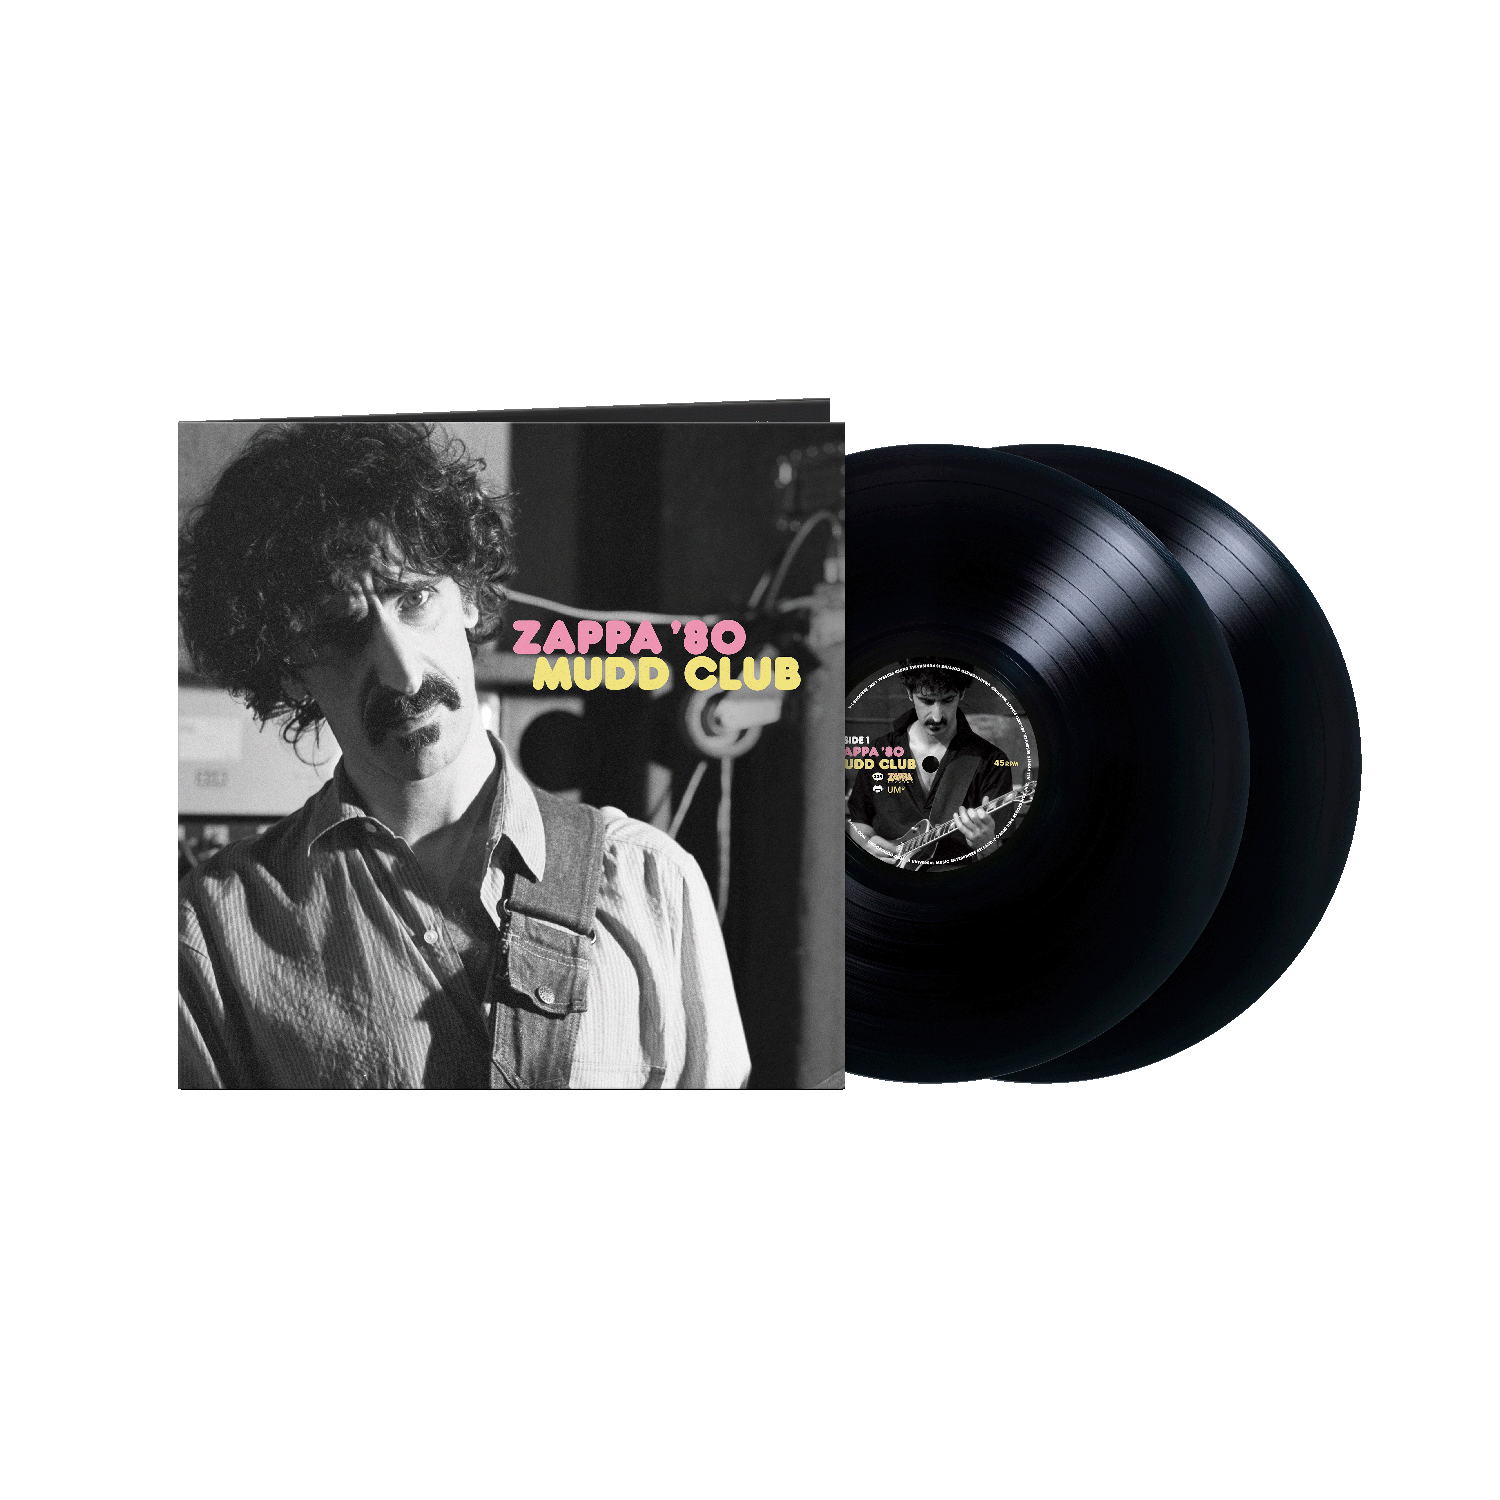 Frank Zappa - Zappa ’80 - Mudd Club: Vinyl 2LP